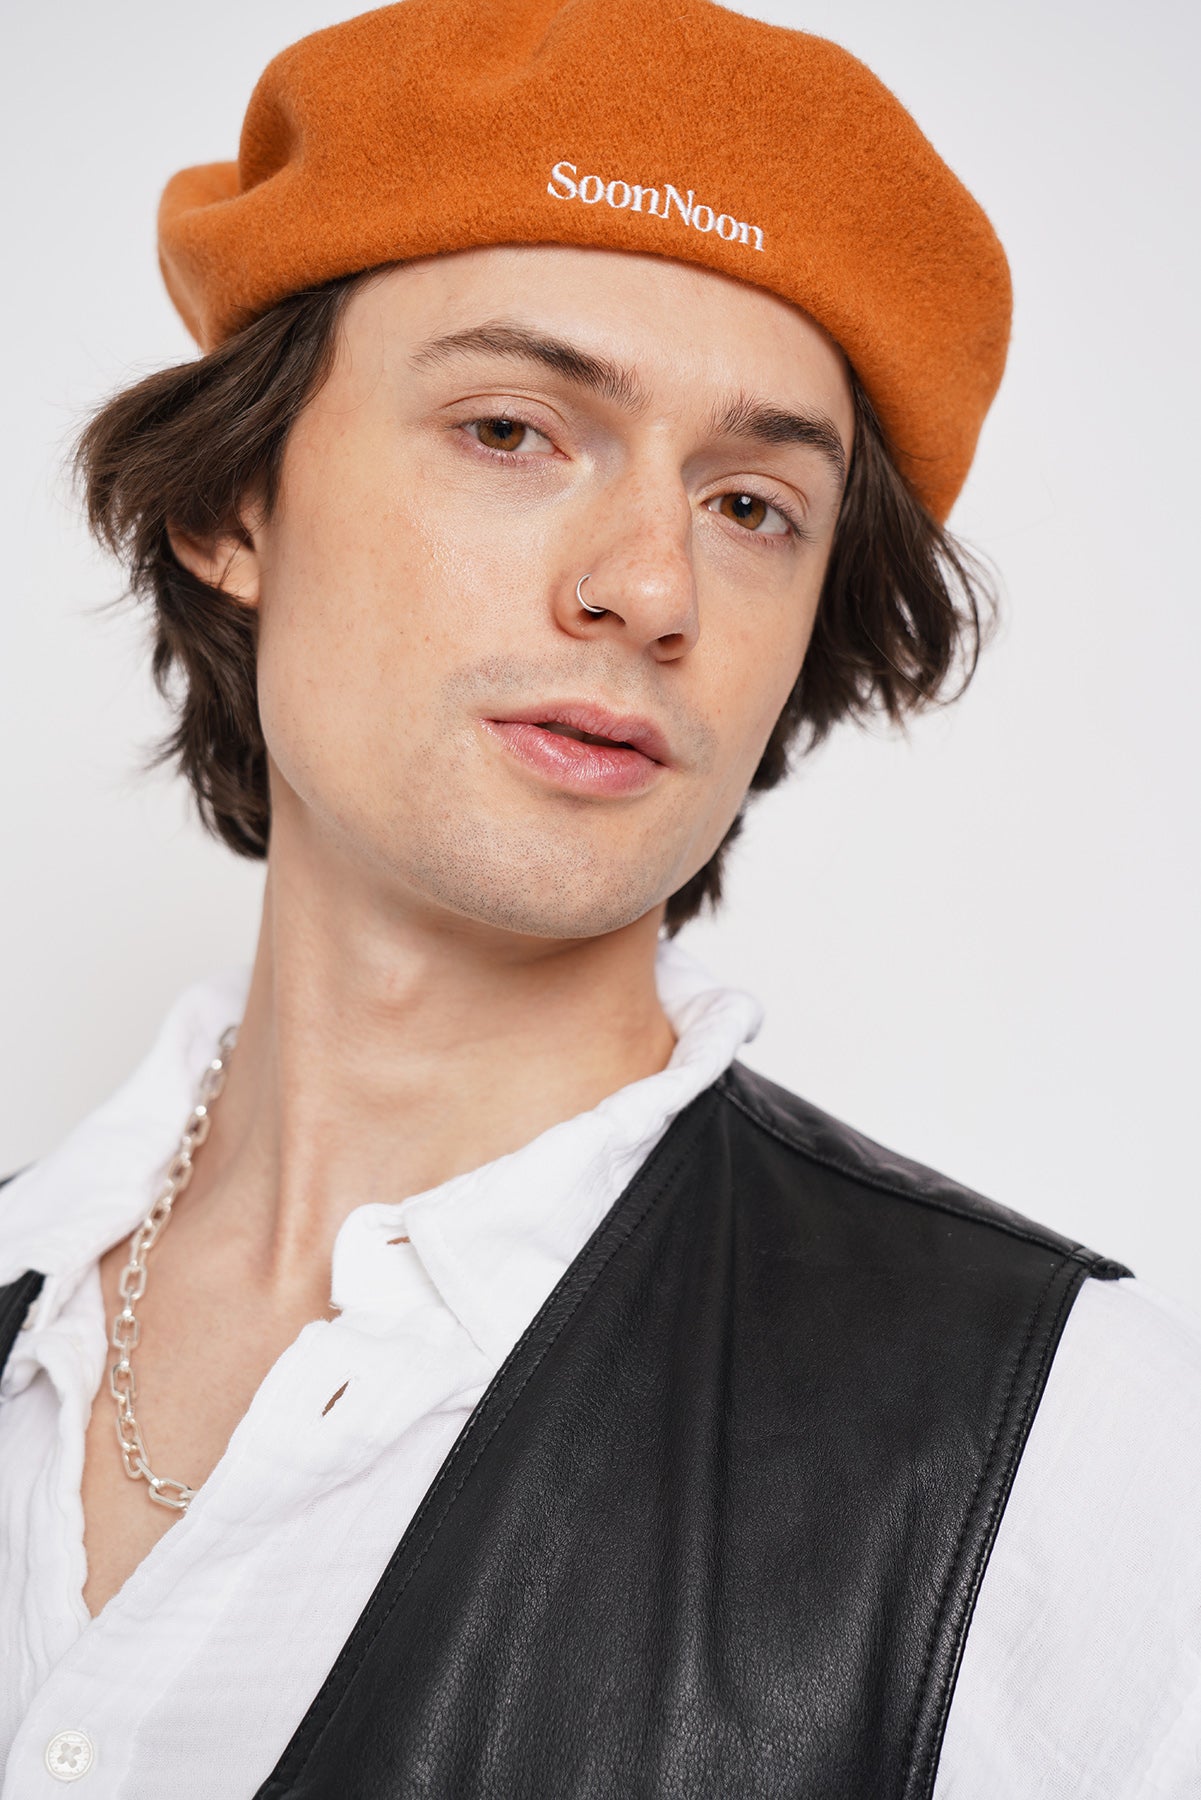 Unisex orange beret hat in 100% wool felt, by SoonNoon in Stockholm